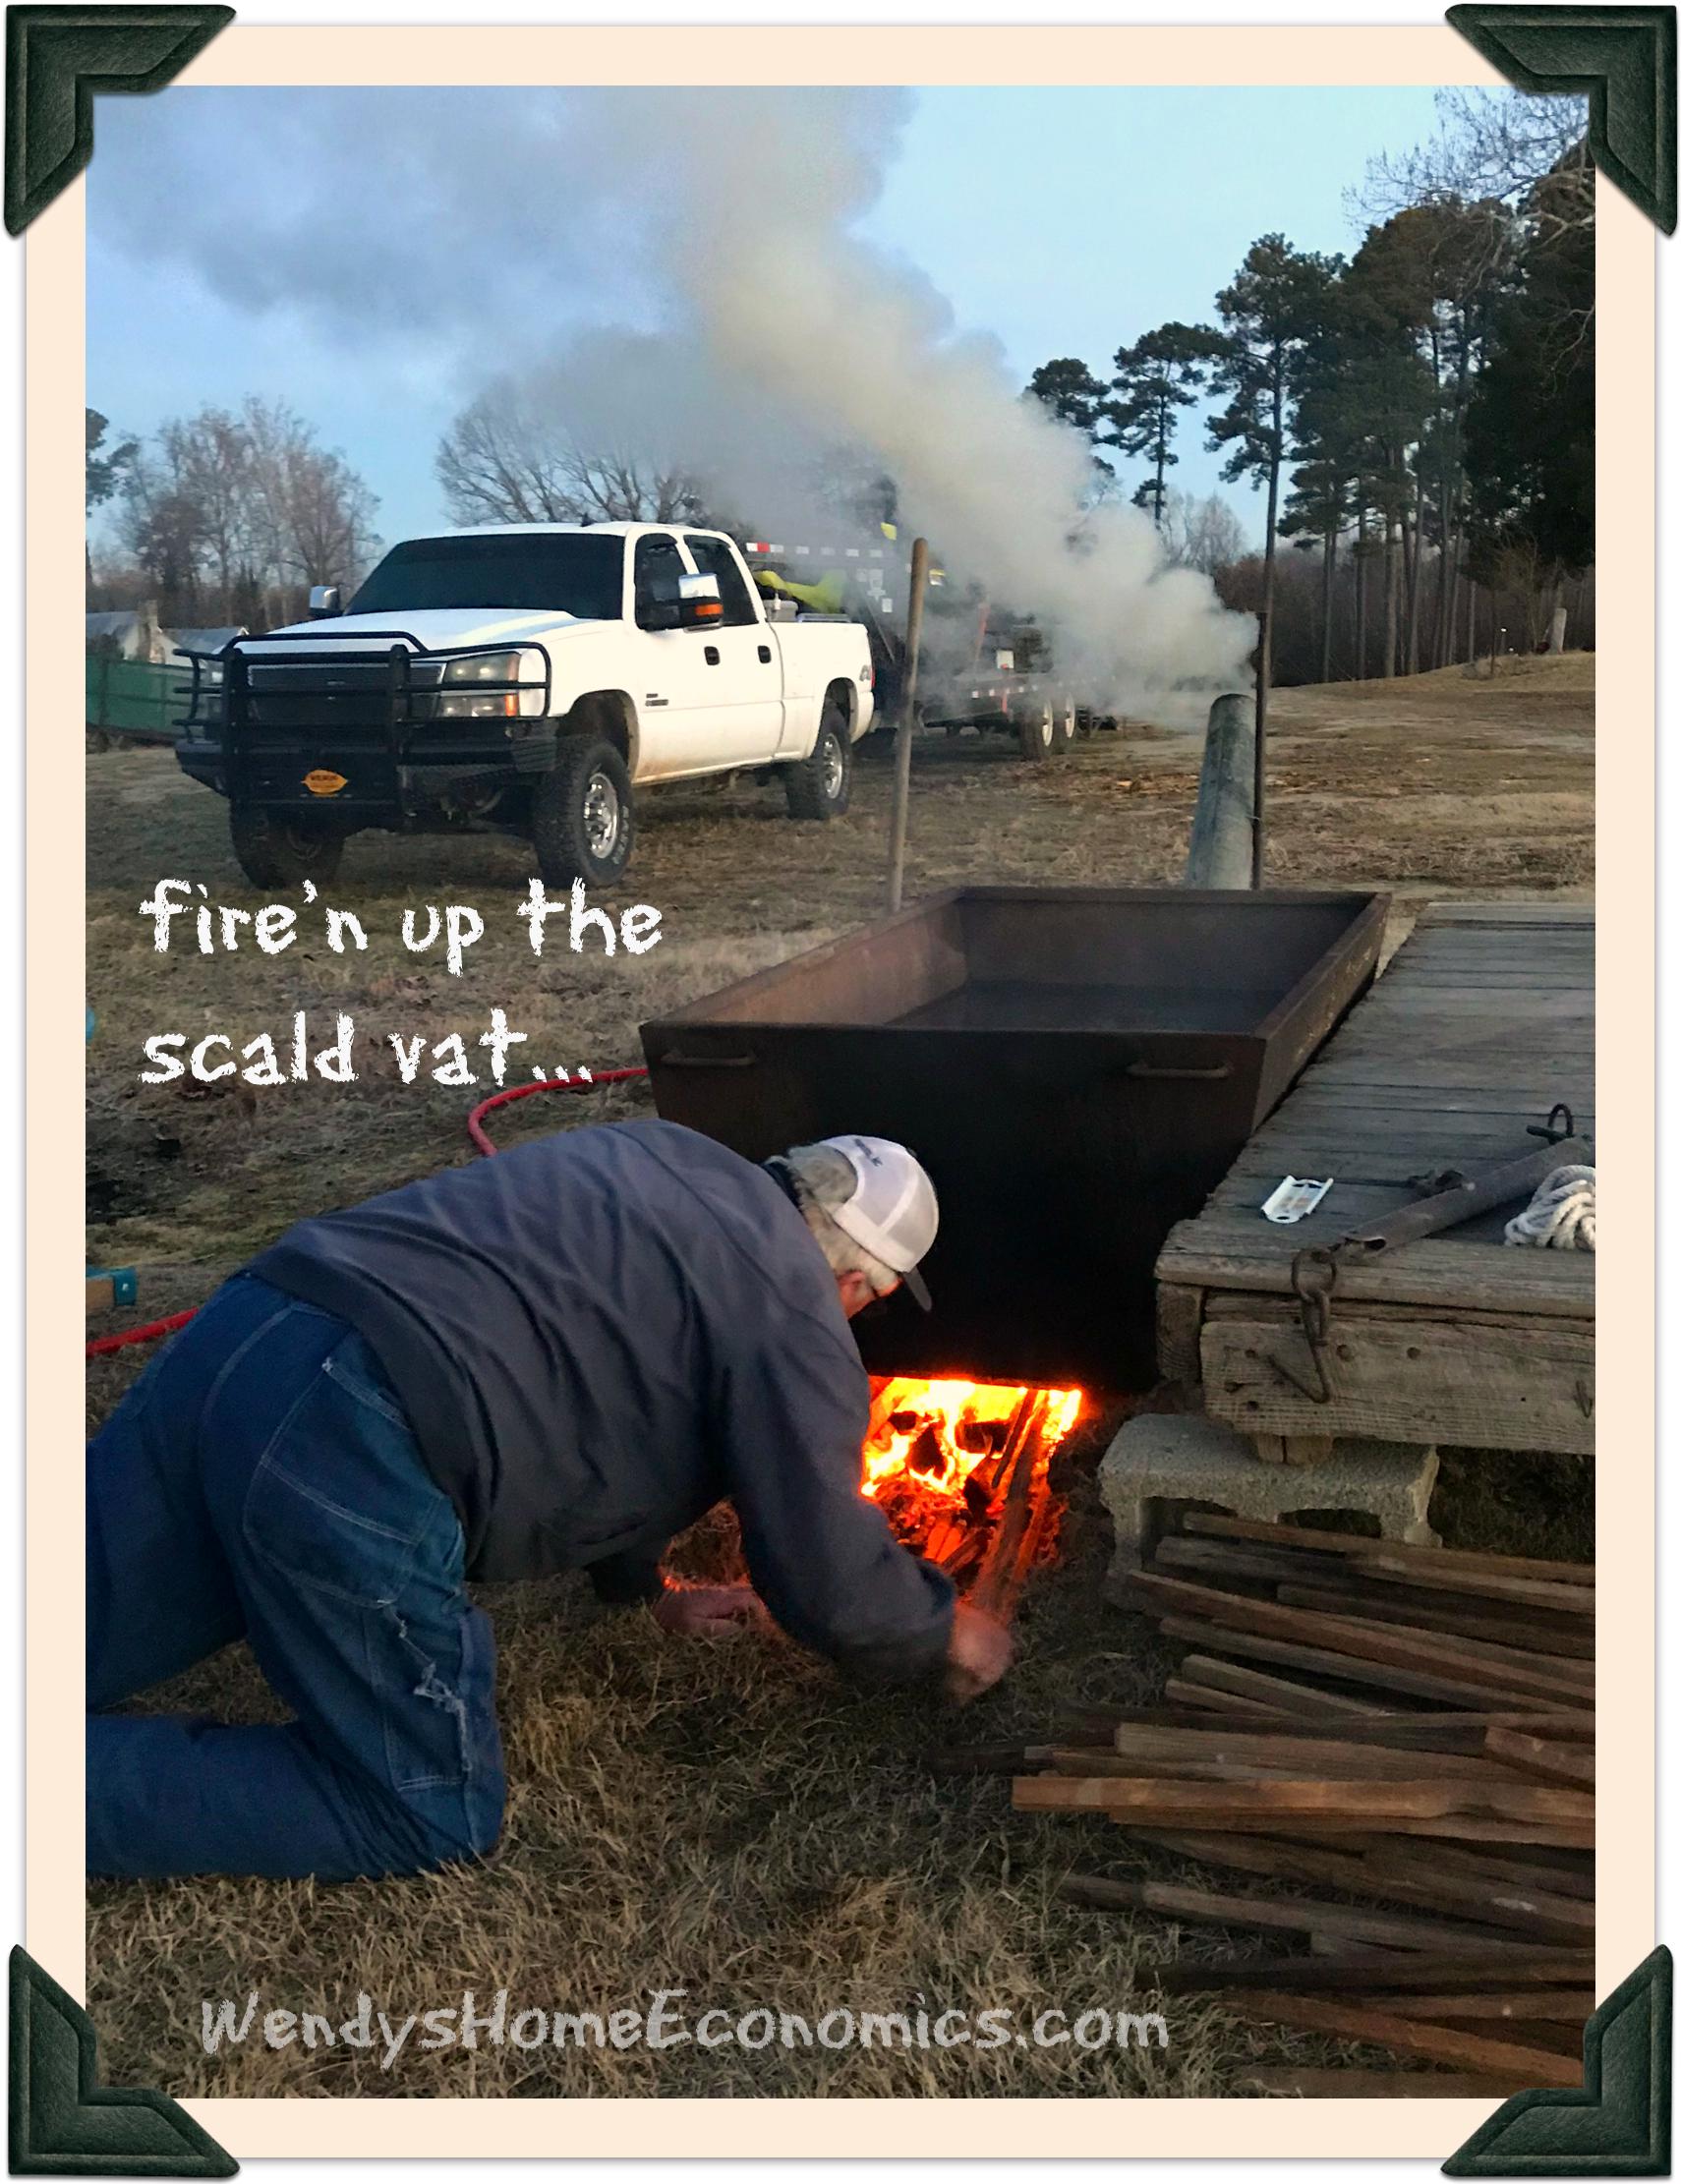 Terry feeding the scalding vat fire...